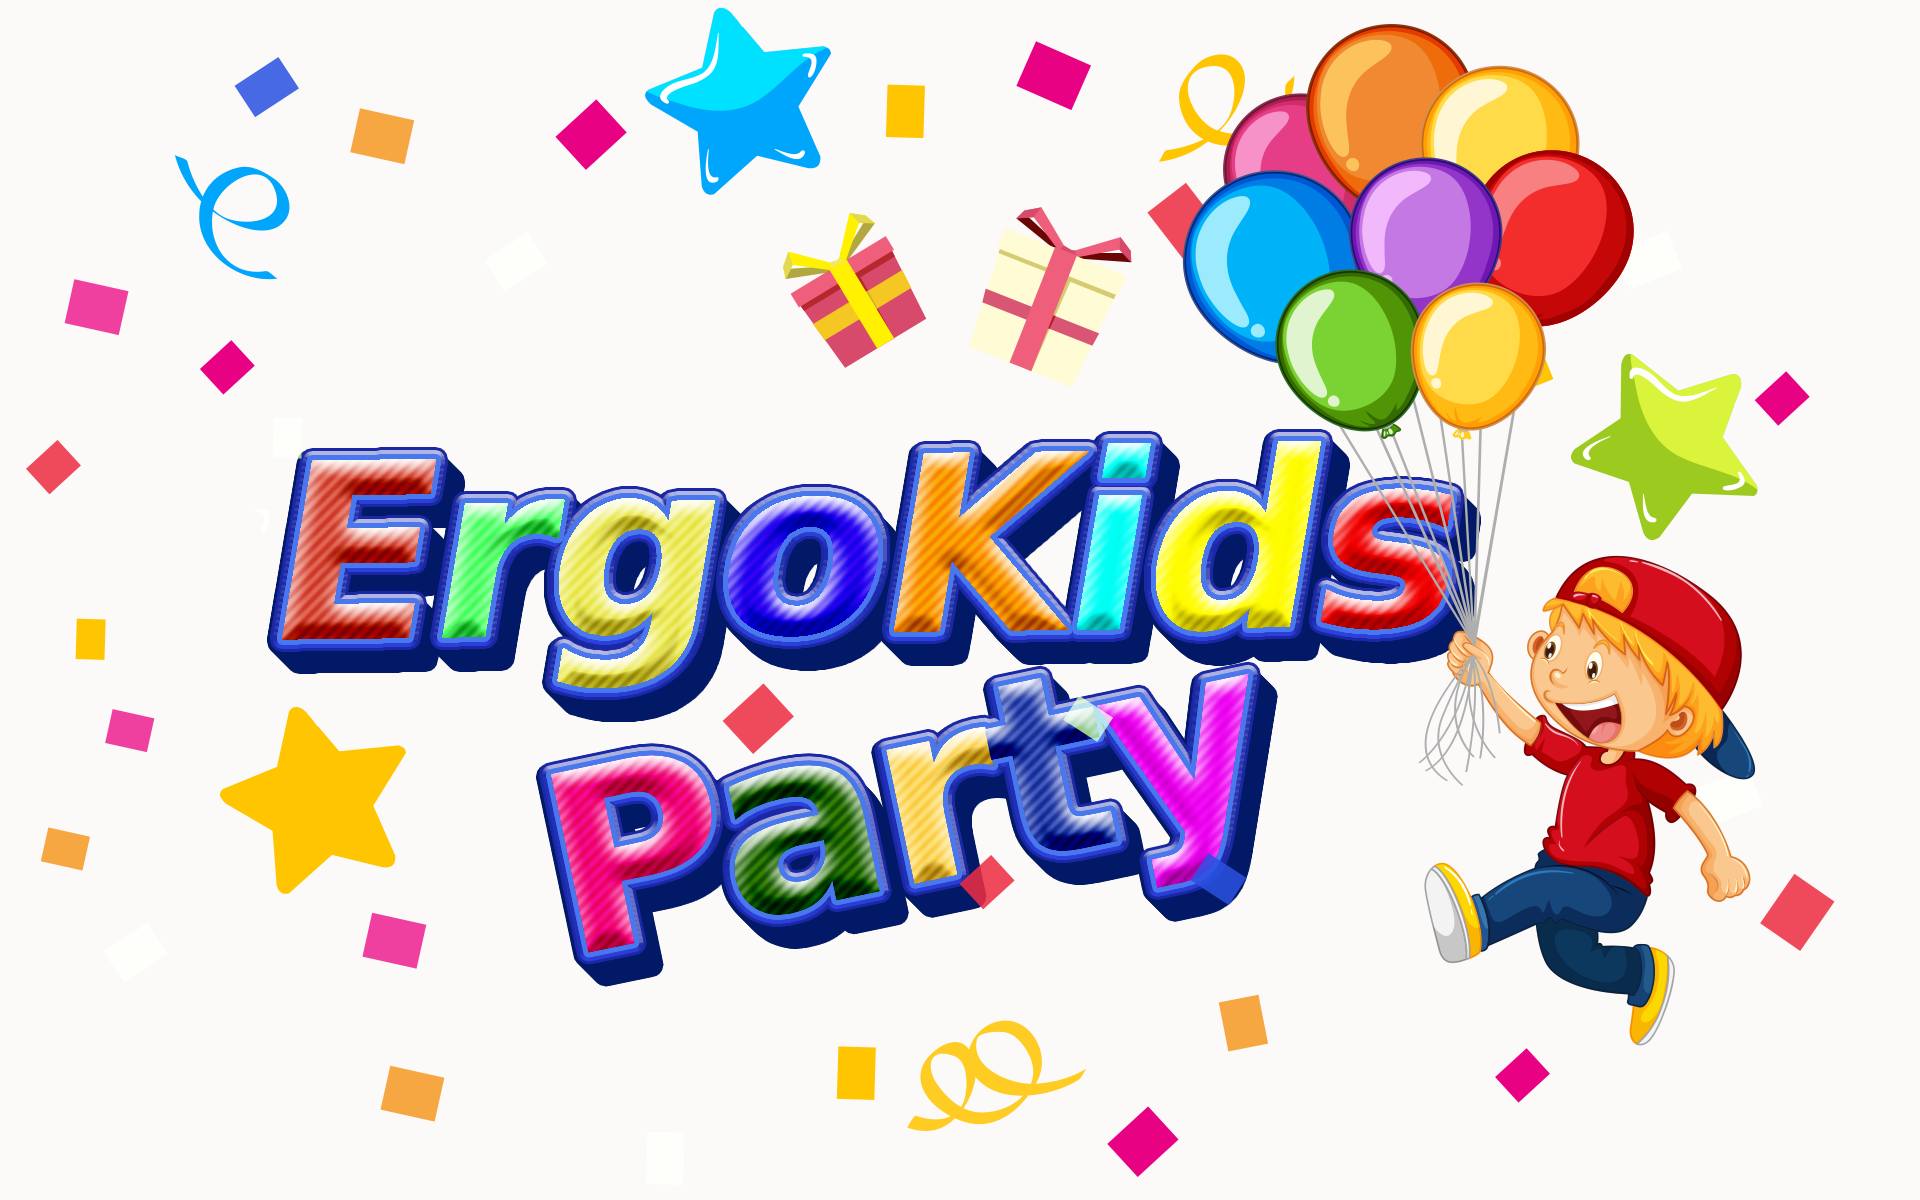 ErgoKids party logo